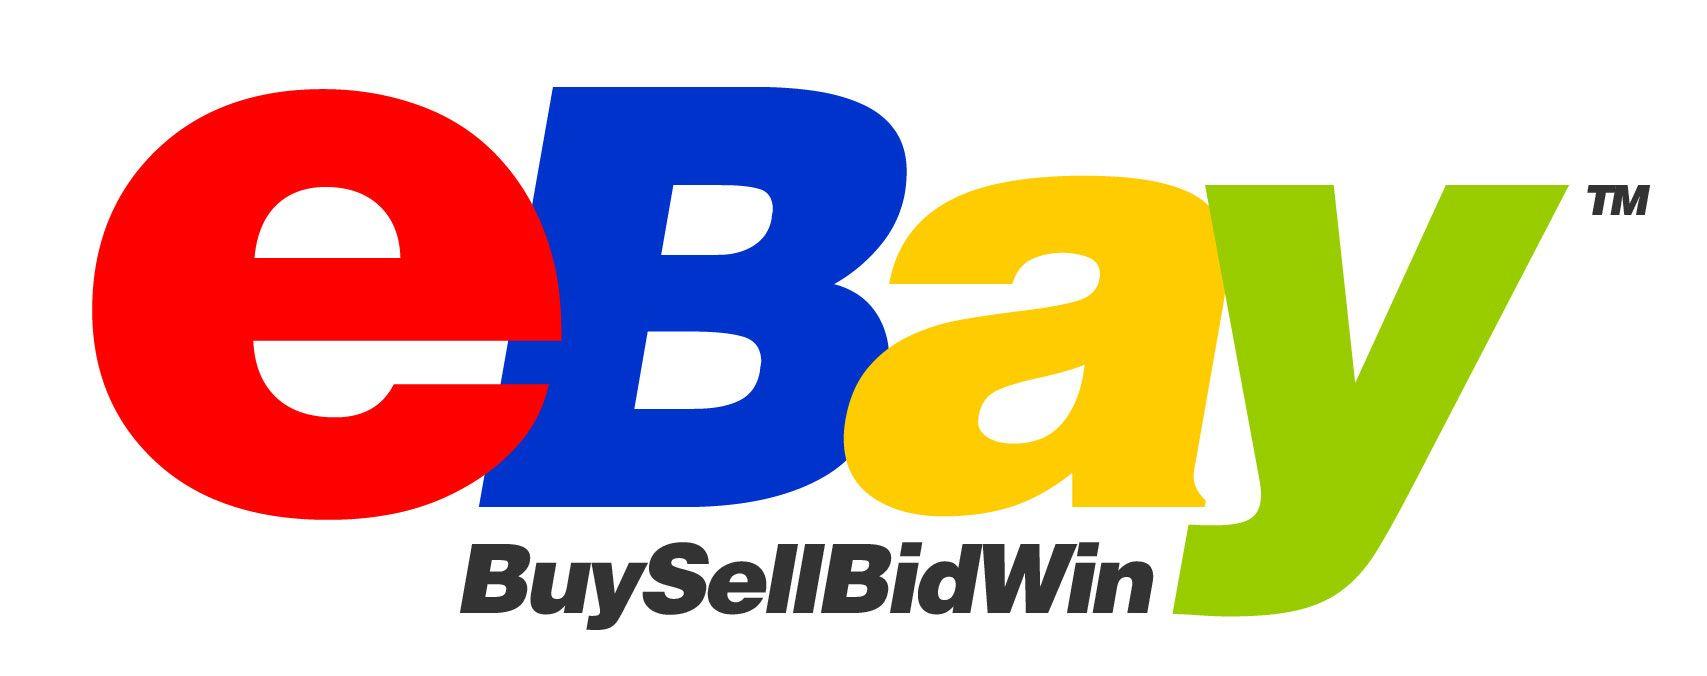 eBay Logo - eBay logo disaster…? | What's That Font?